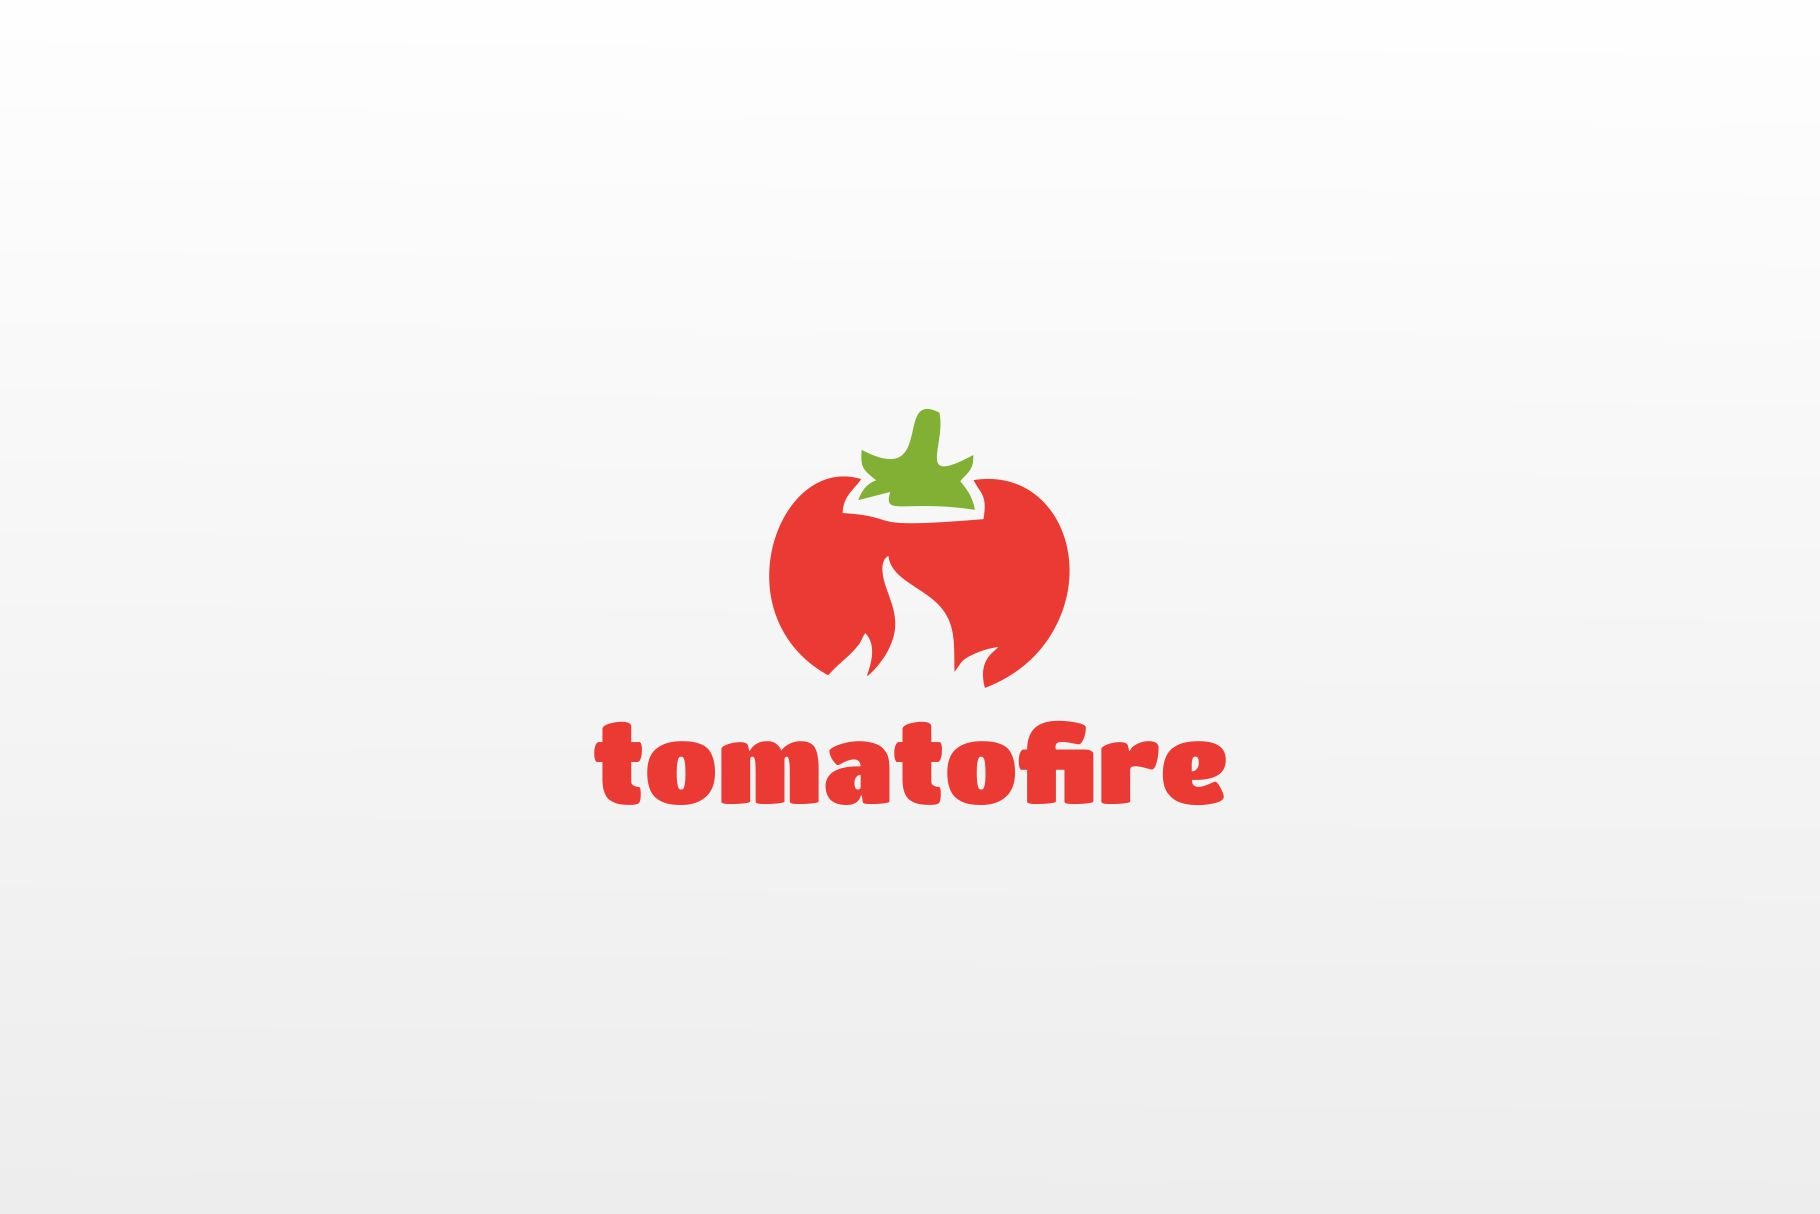 Tomato fire logo vector template preview image.